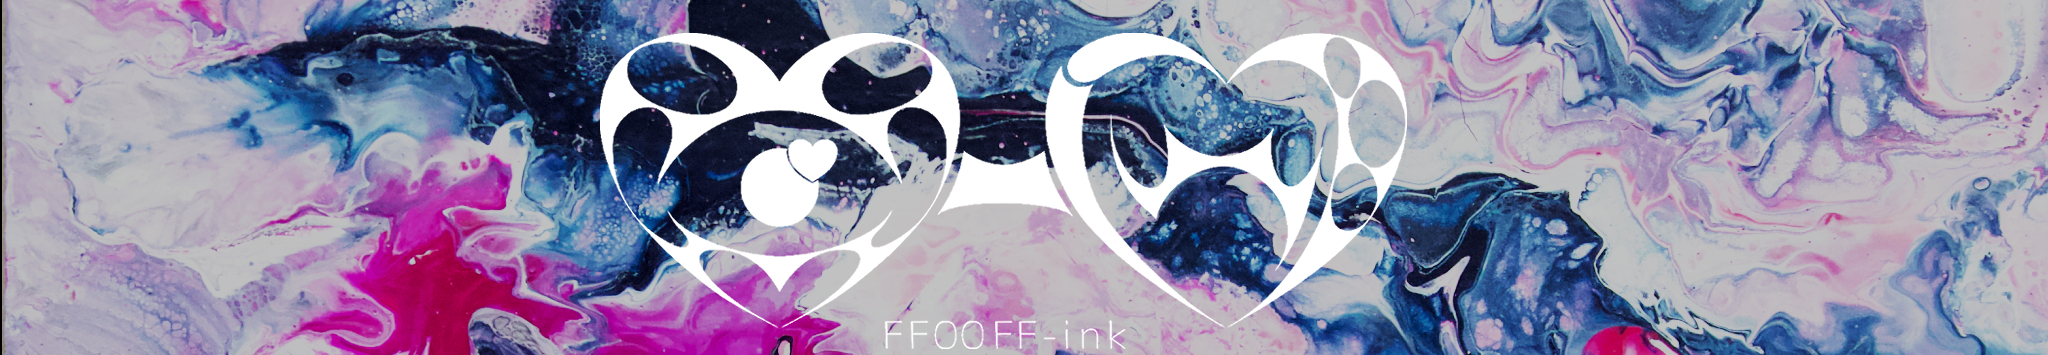 Banner profilu uživatele FF00FF-ink マゼンタインク